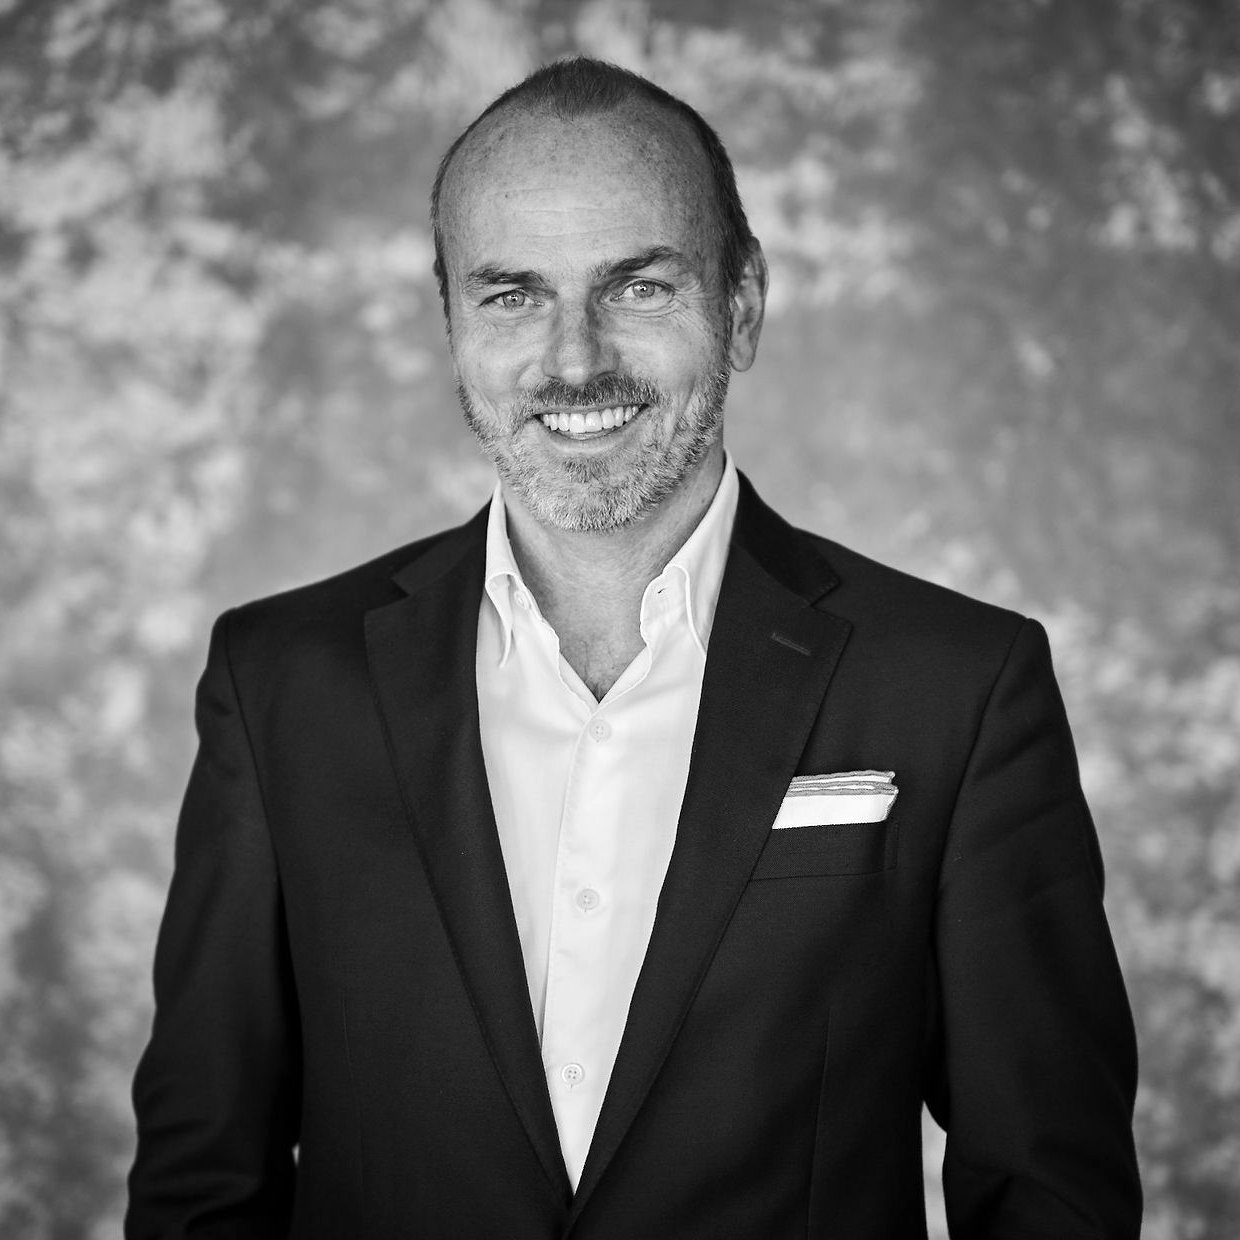 Ådne Grødem, CEO at Herfo Finans AS